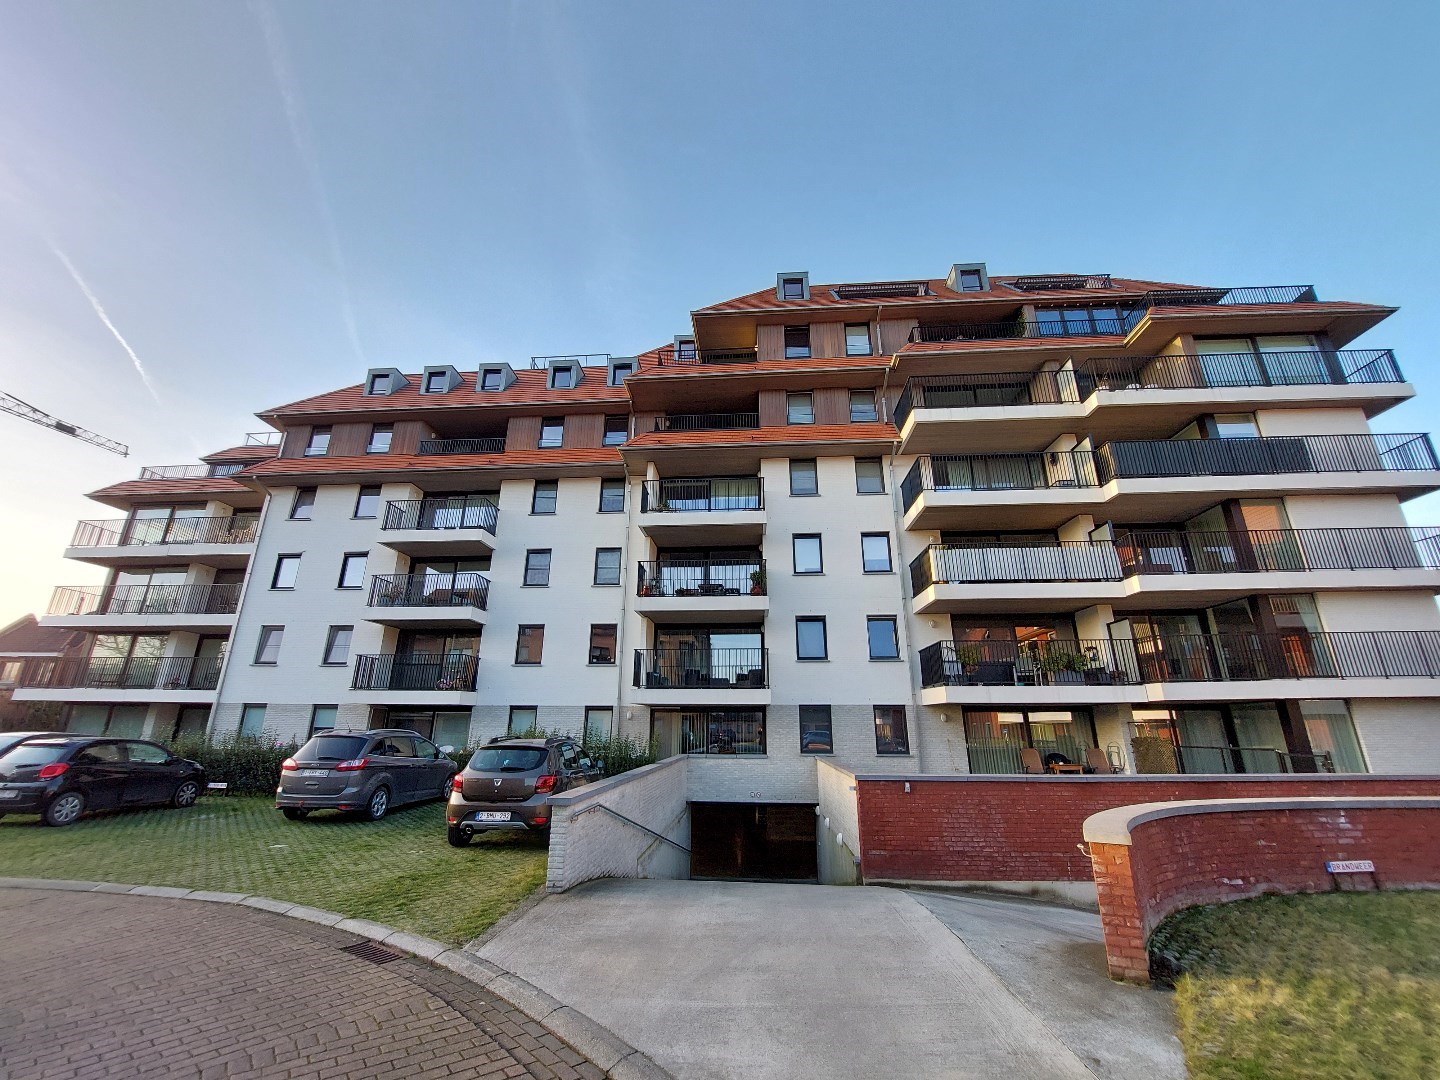 Recent appartement in residentie 't Zuid- 2 slaapkamers + terras + dubbele parking. foto 23